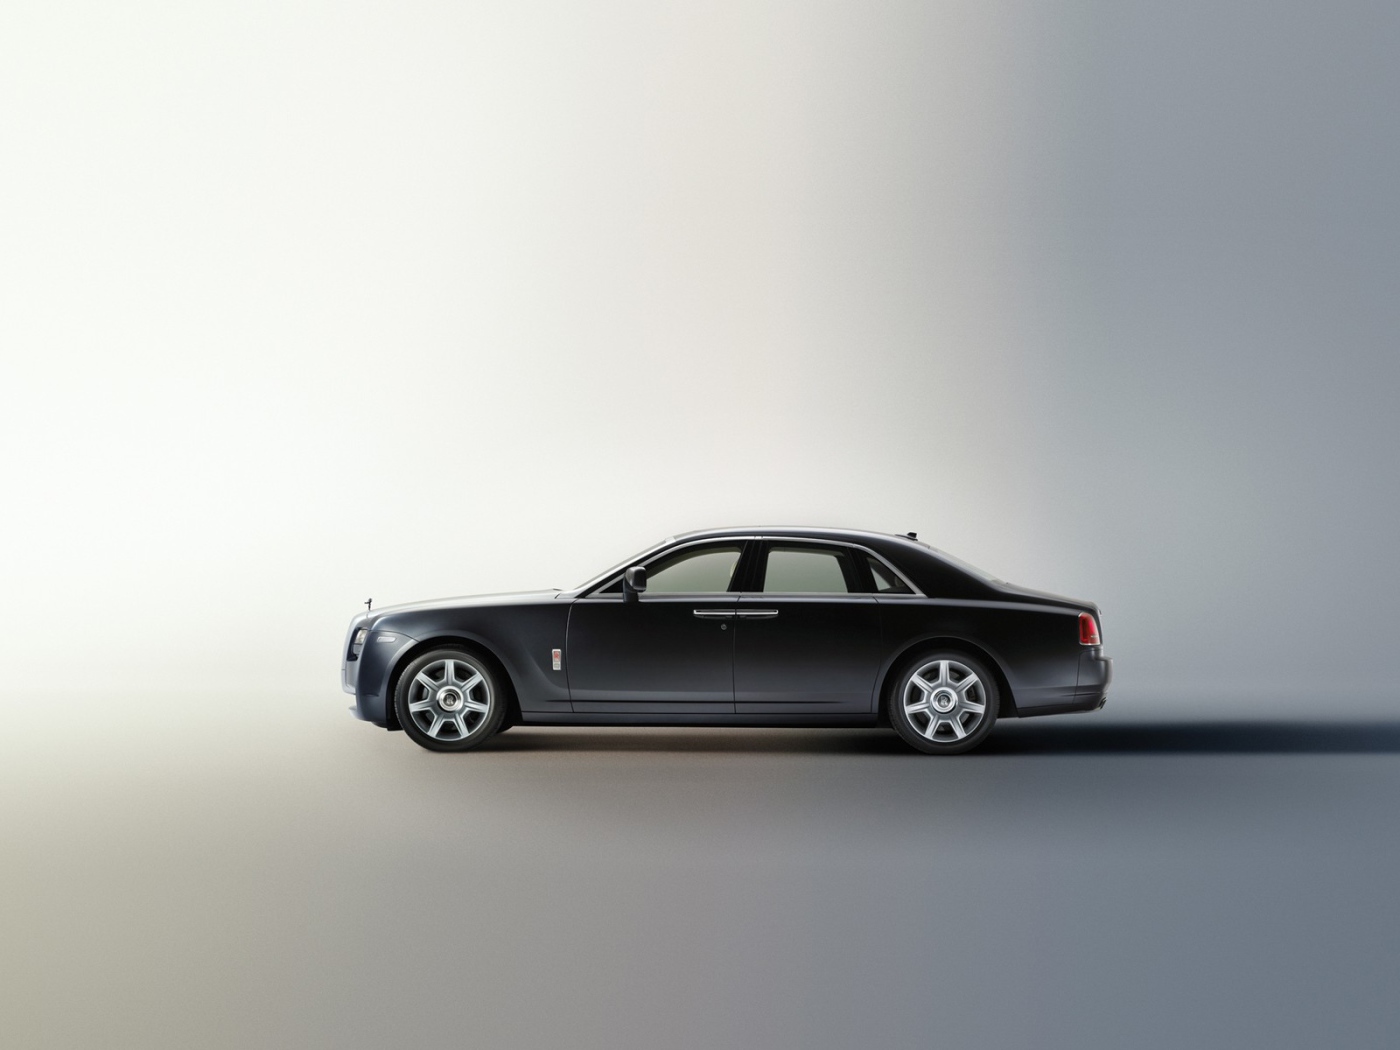 Автомобиль Rolls-Royce